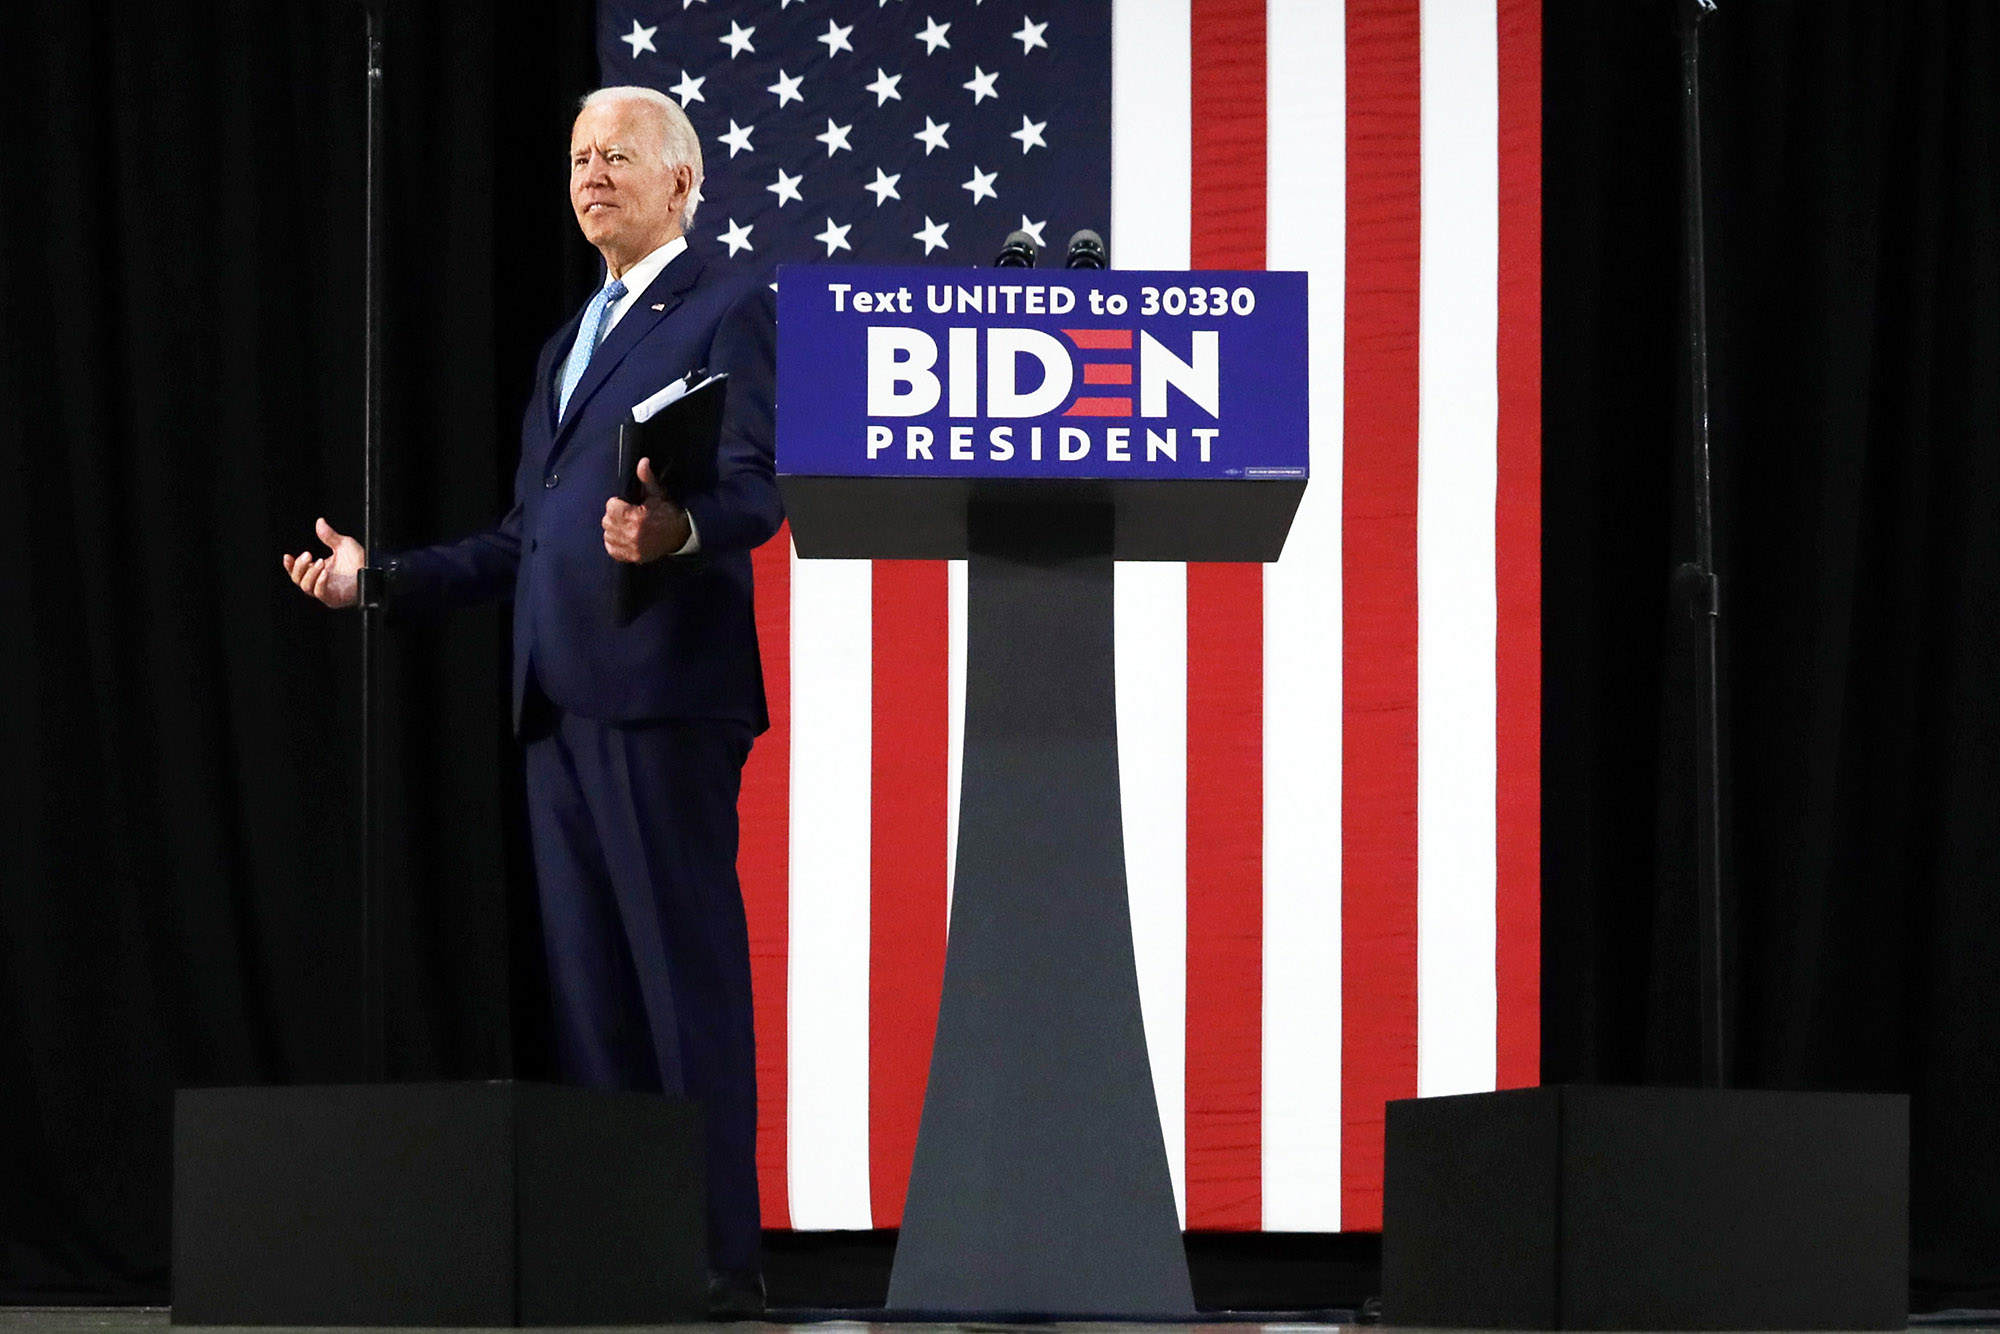 Joe Biden speaks during a campaign event in Wilmington, Delaware.